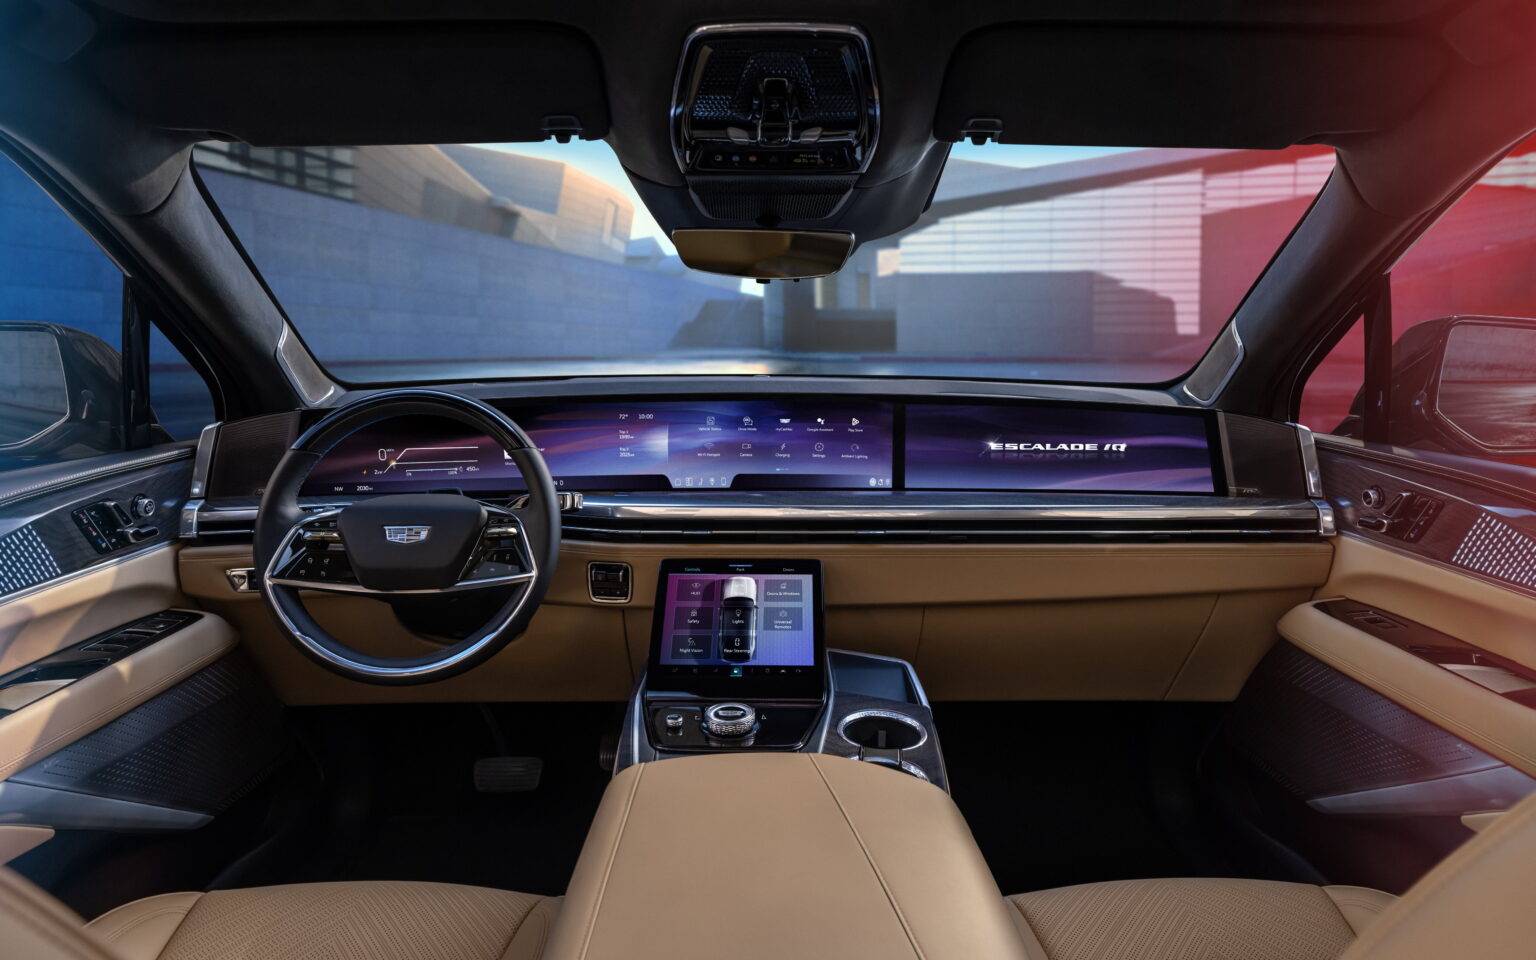 2025 Cadillac Escalade IQ Interior Image 2